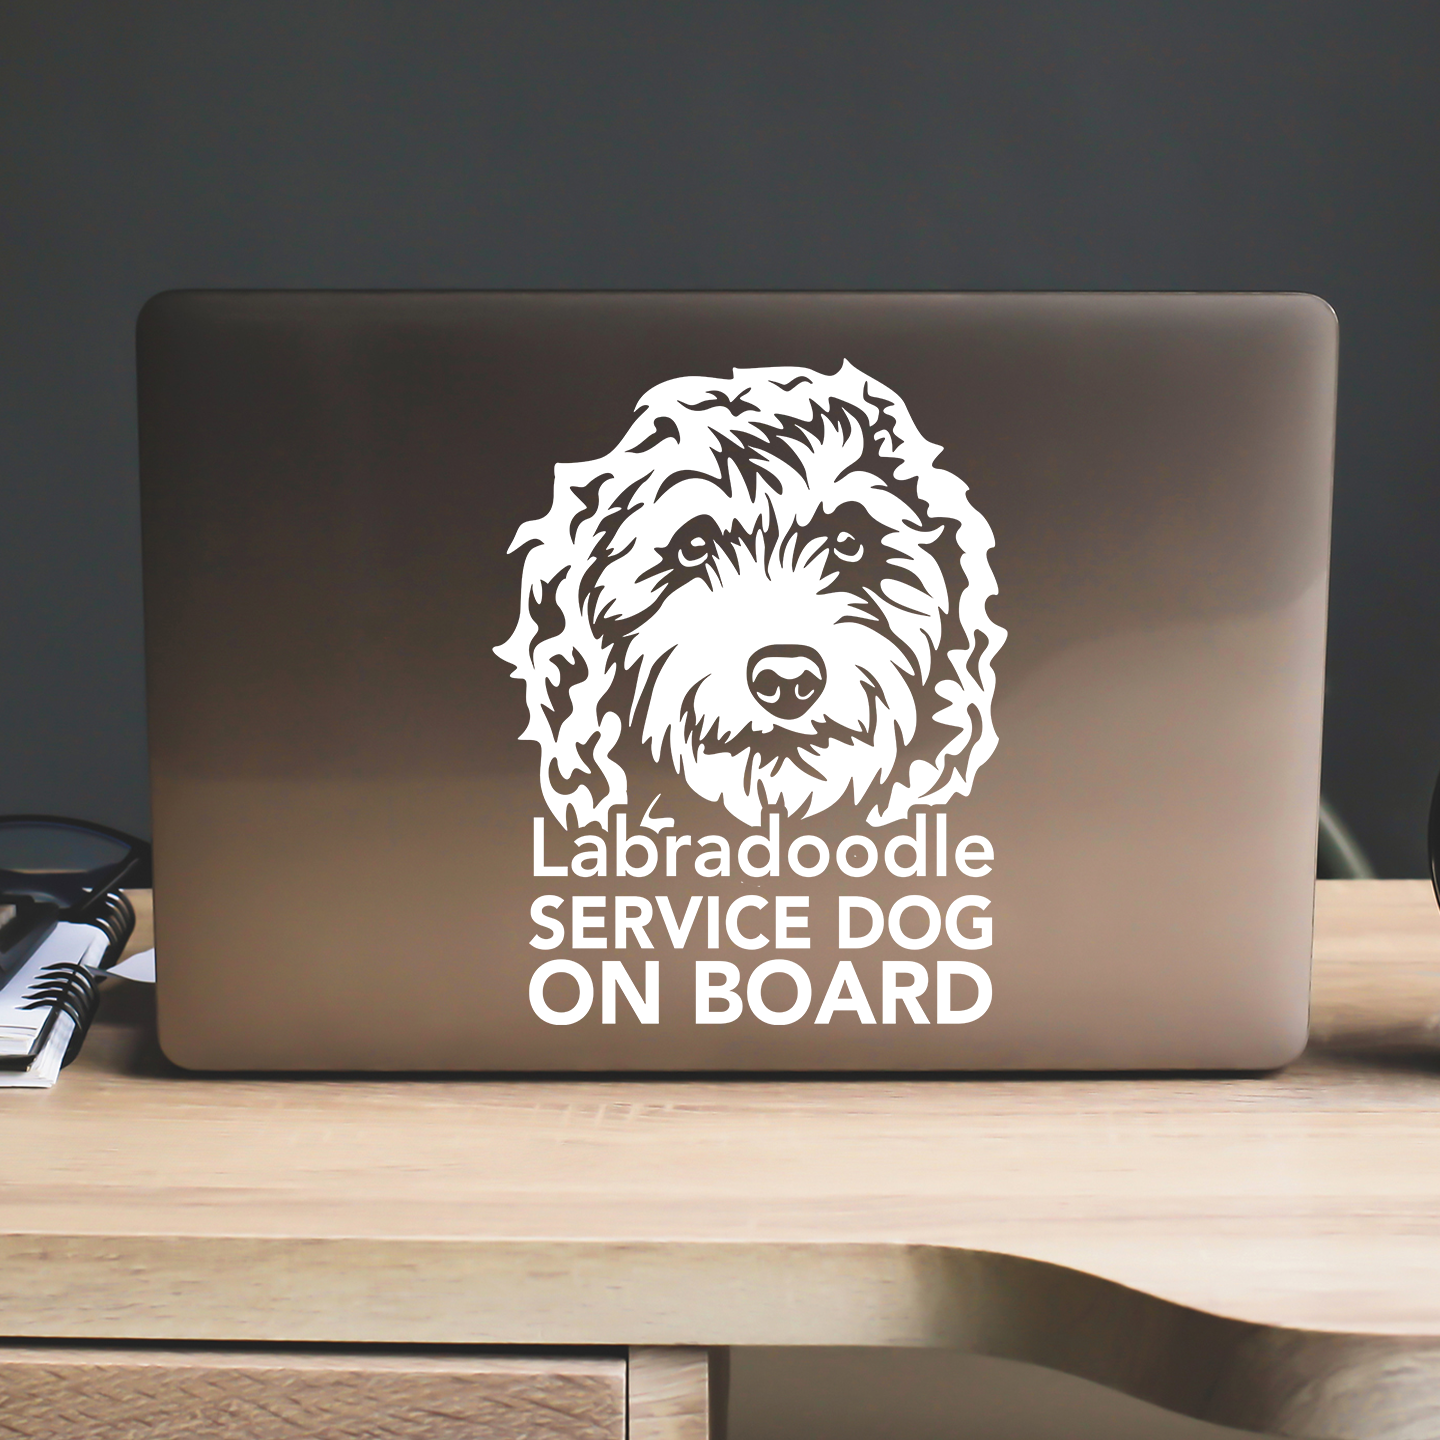 Labradoodle Service Dog On Board Sticker